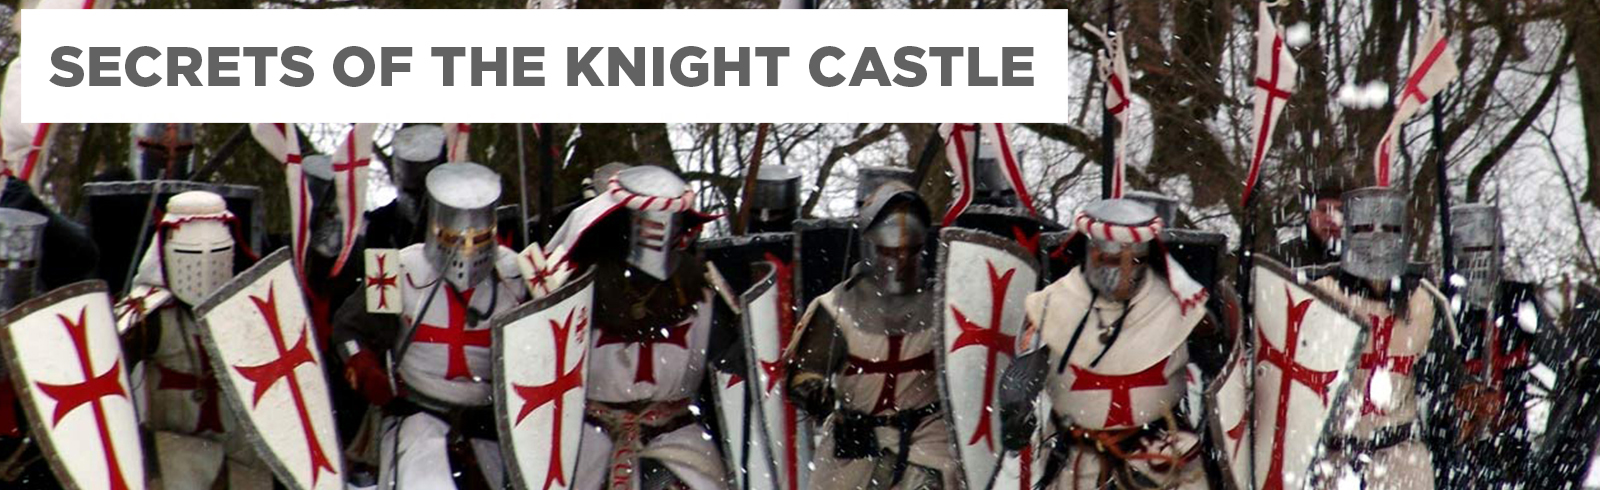 Secrets of the Knight Castle